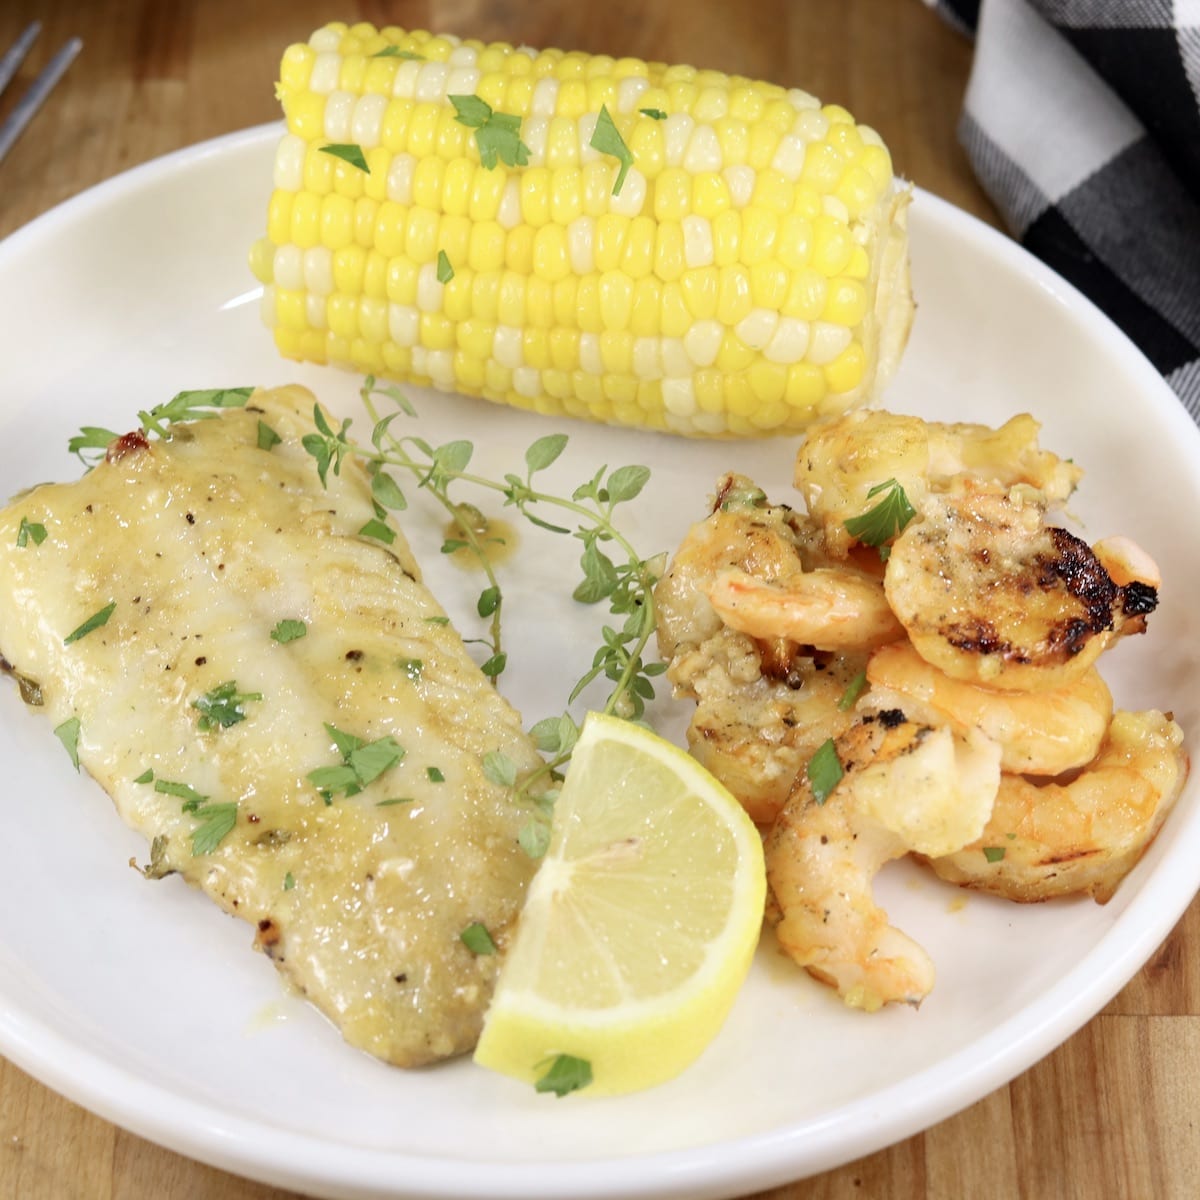 Lemon Garlic Fish and Shrimp with corn on the cob on a plate, lemon wedge garnish